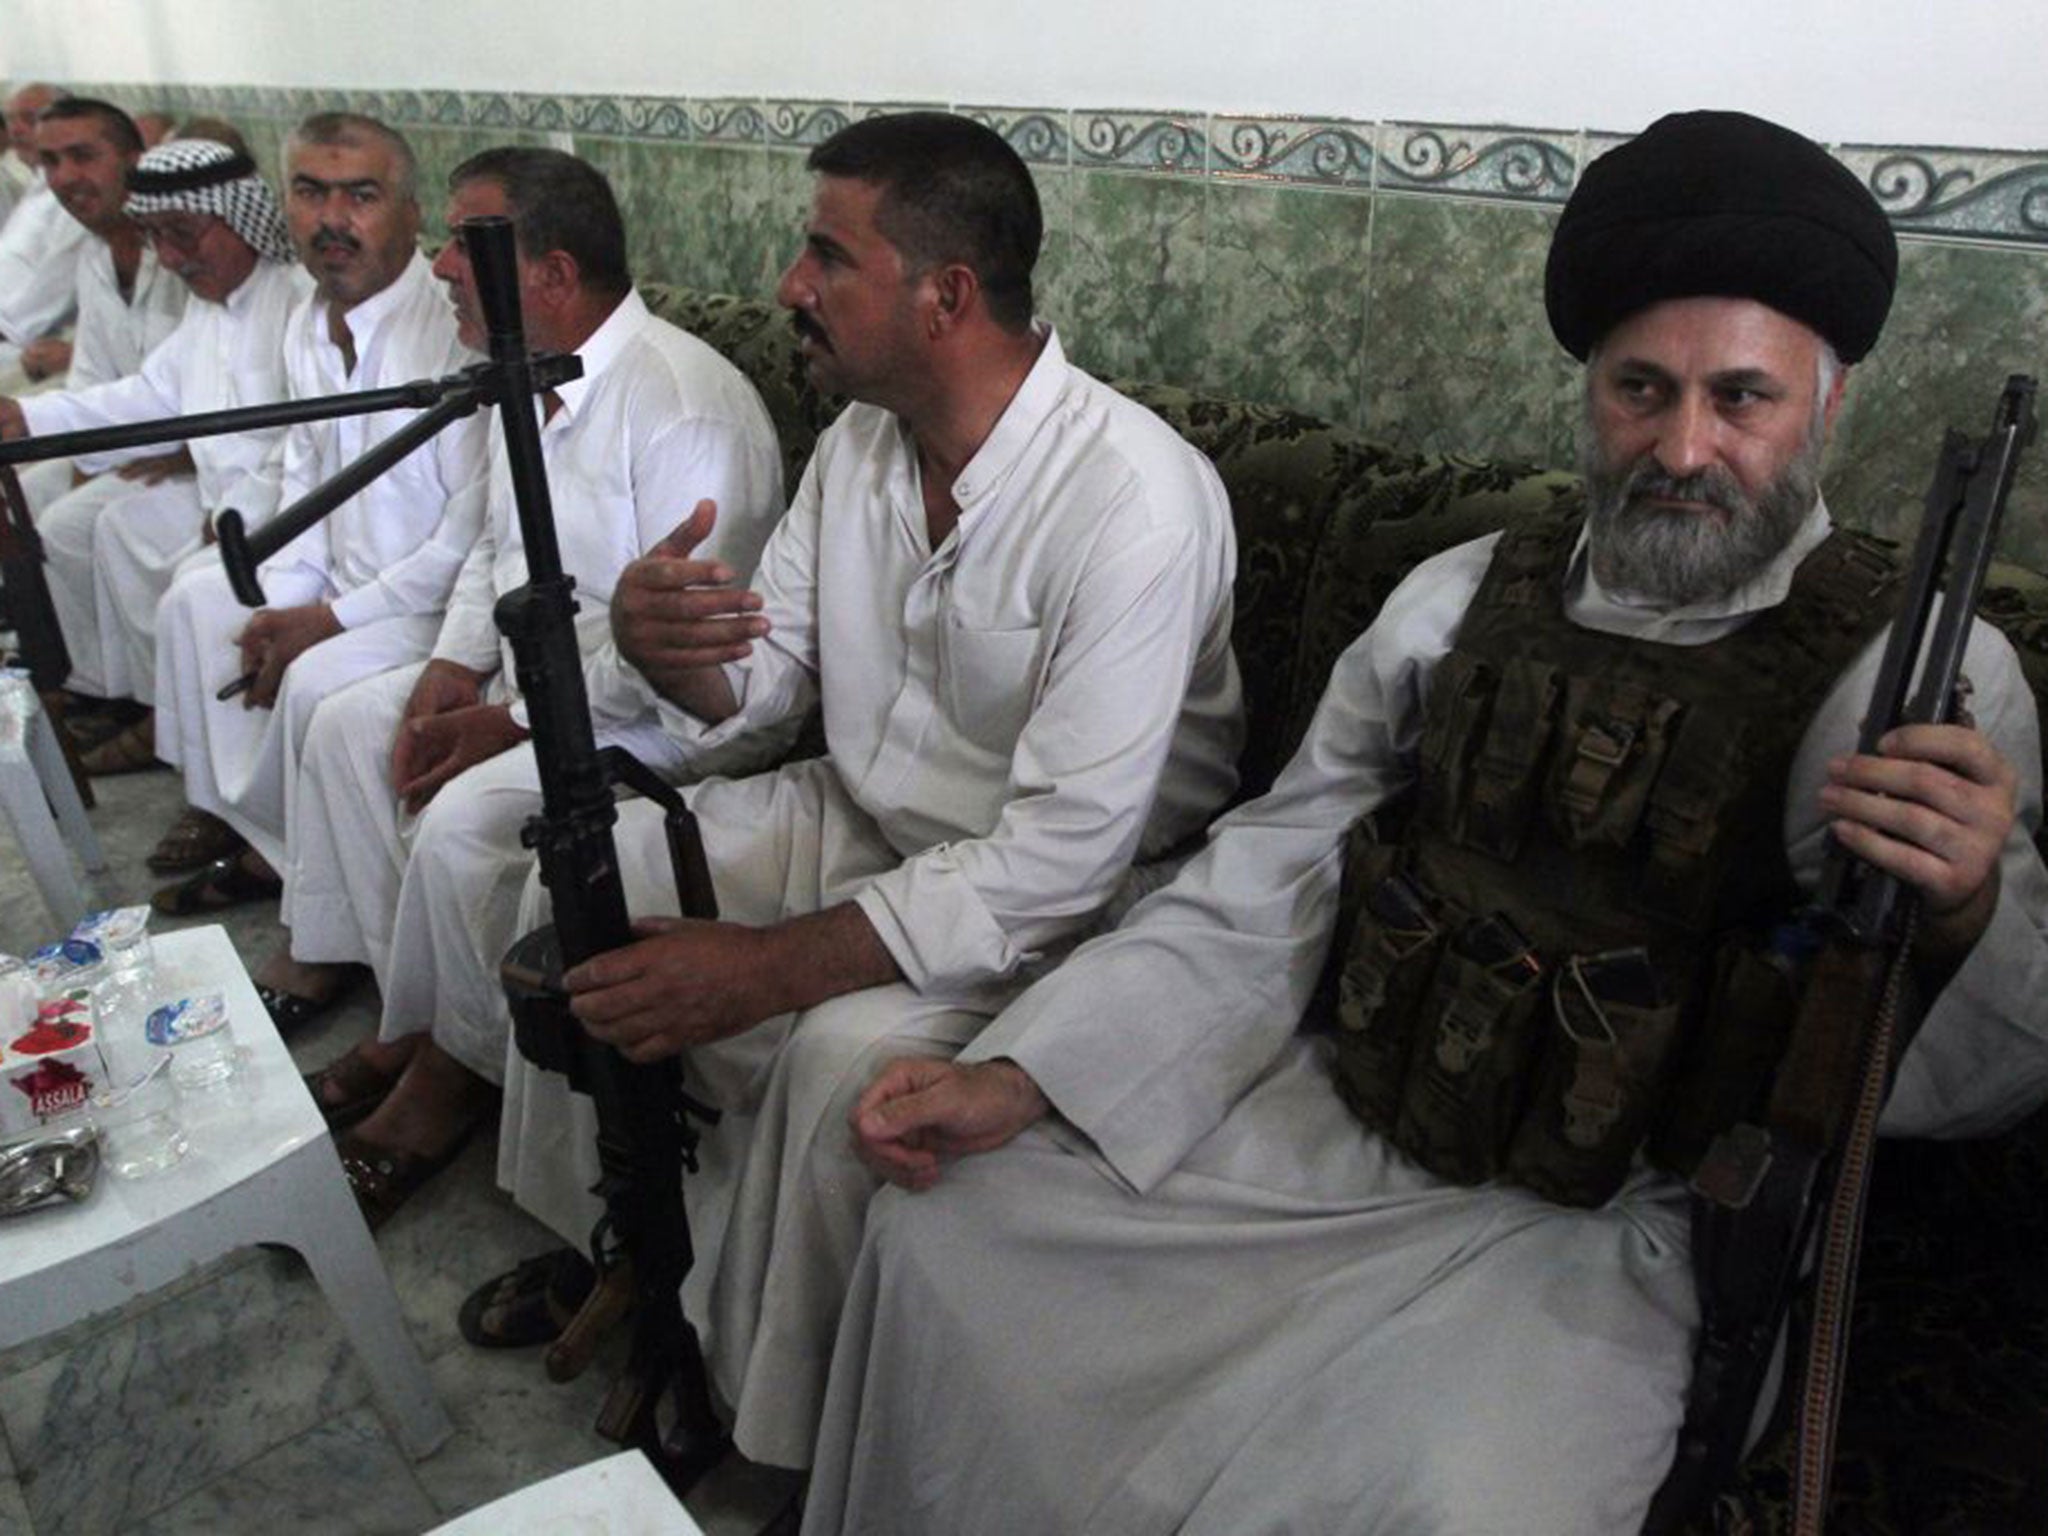 A Shia cleric at a recruitment centre in Diyala province